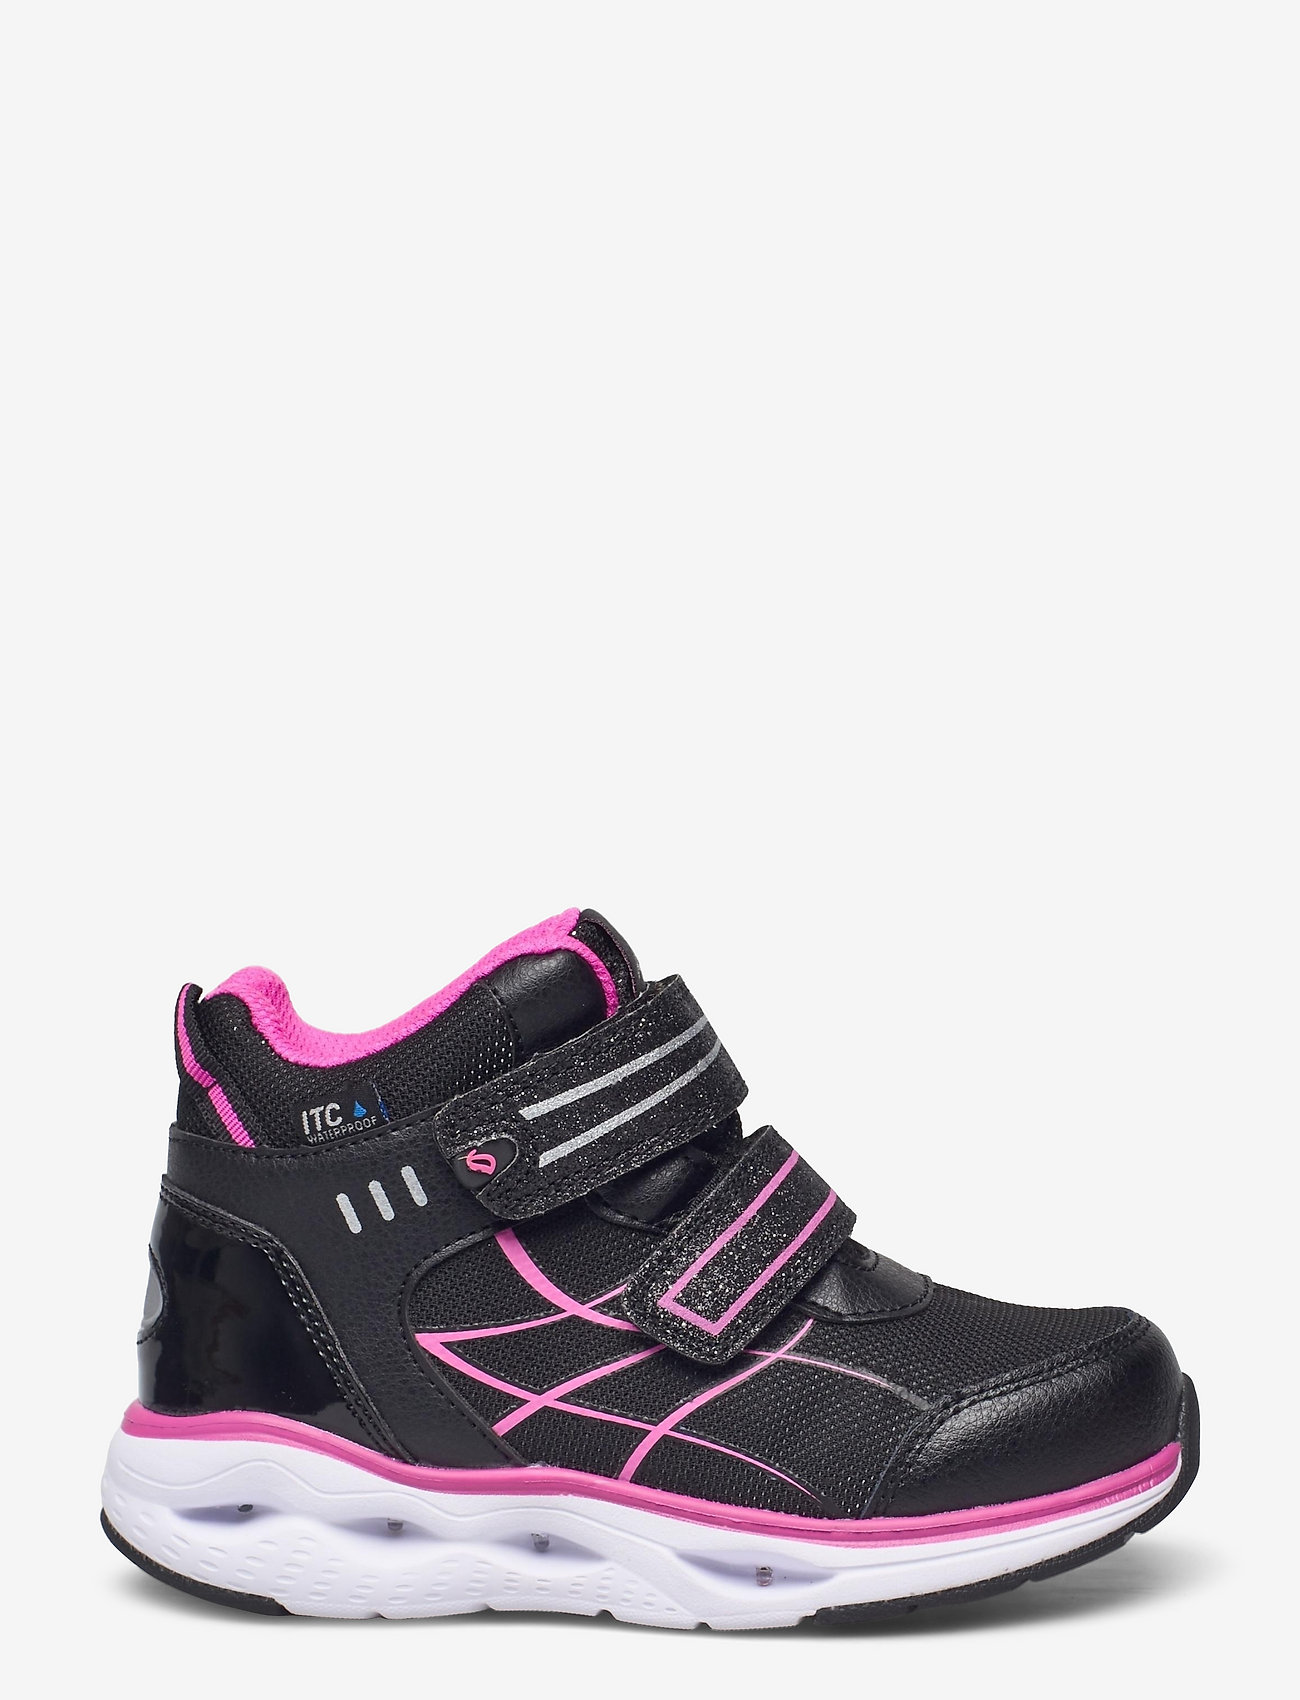 Leaf - Ajos - sneakers med høyt skaft - black/pink - 1